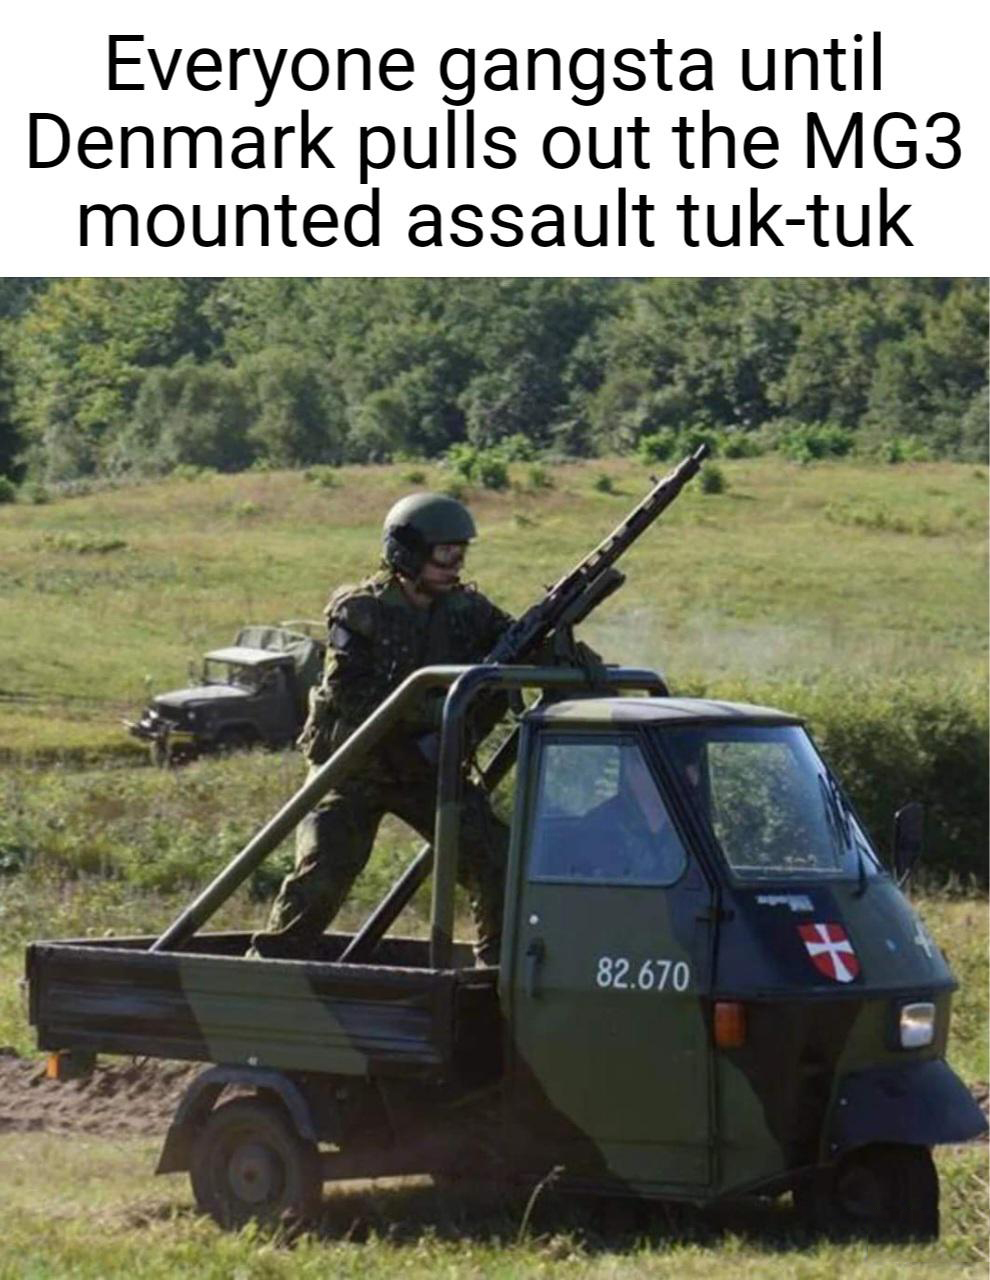 dank memes - funny memes - danish military meme - Everyone gangsta until Denmark pulls out the MG3 mounted assault tuktuk Varing 82.670